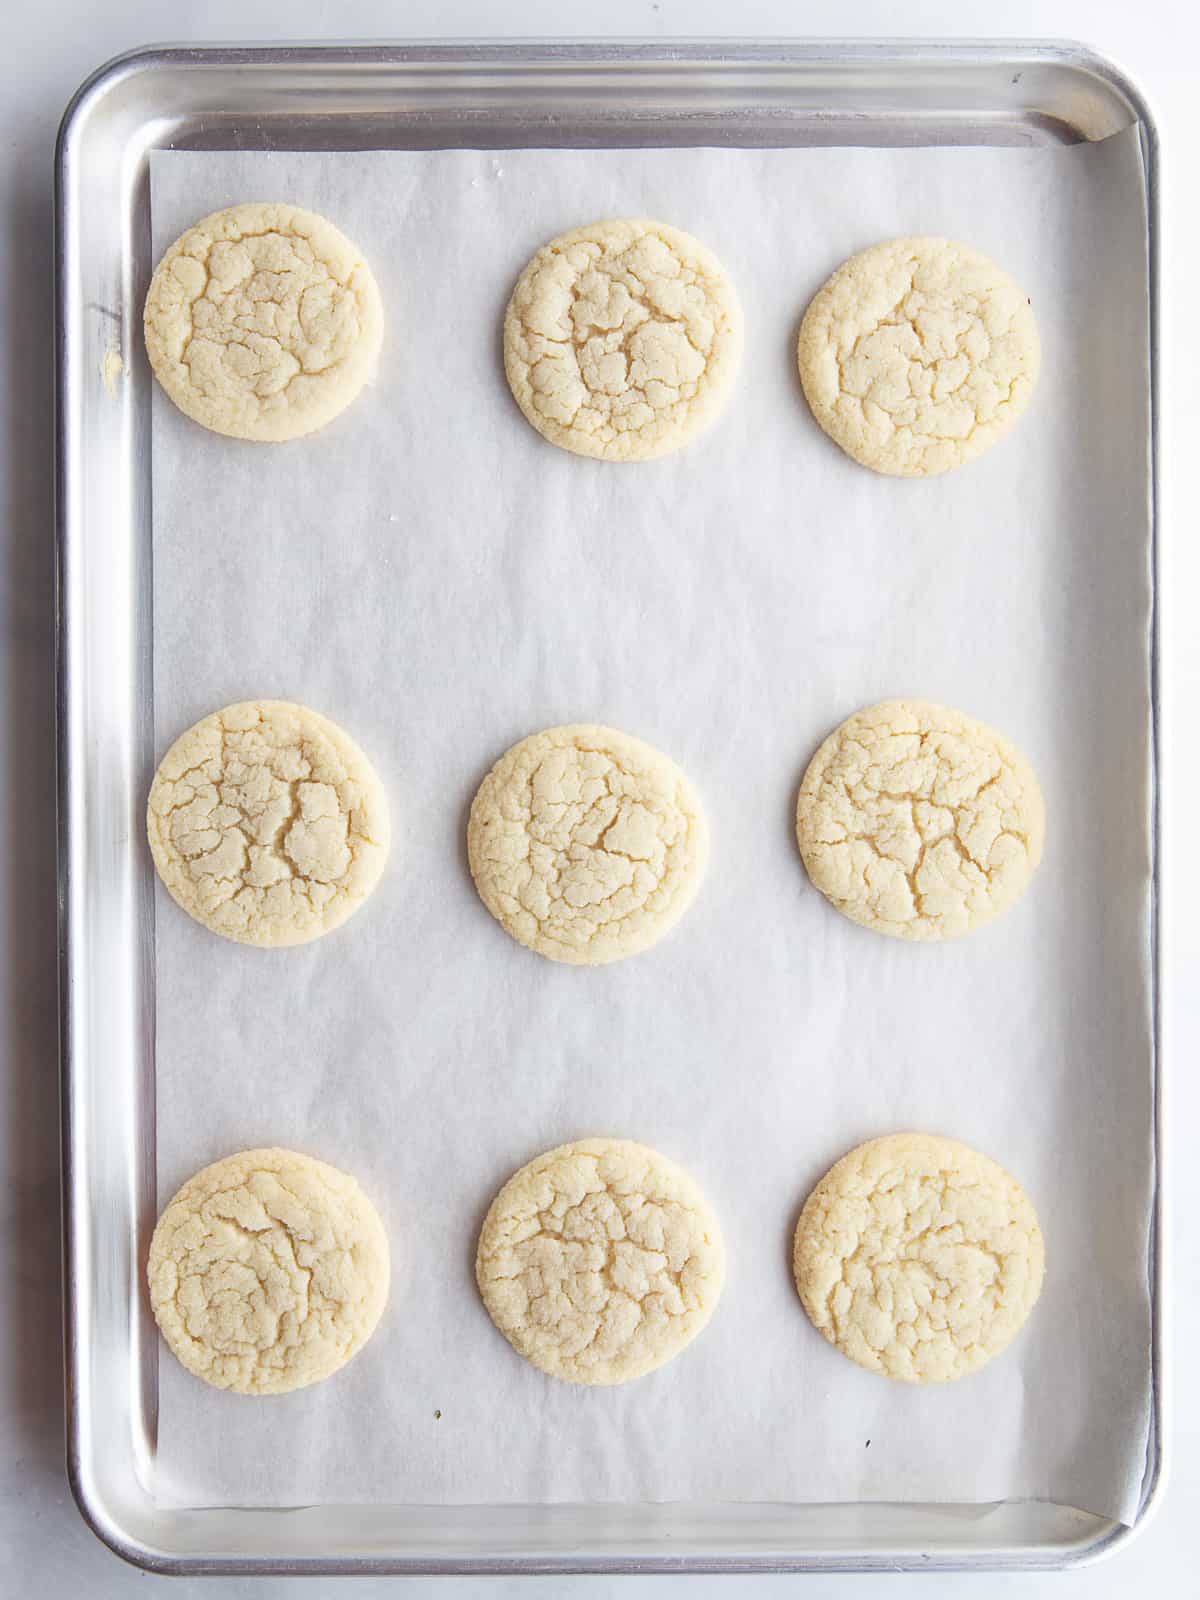 Baked gluten-free sugar cookies on a baking sheet.